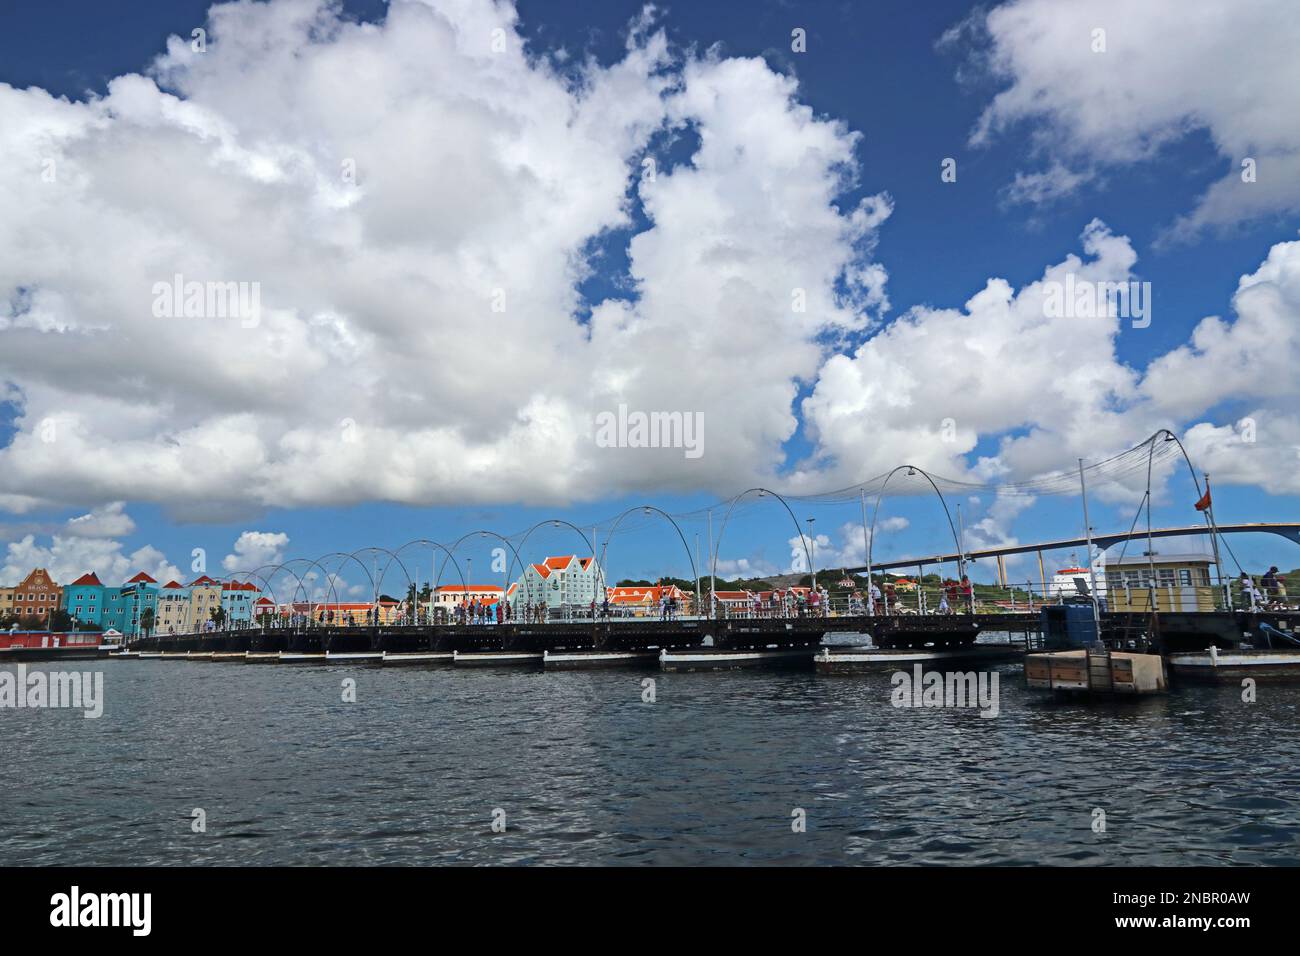 Queen Emma rotating pontoon bridge spanning St Anna Bay, Willemstadt, Curacao Stock Photo